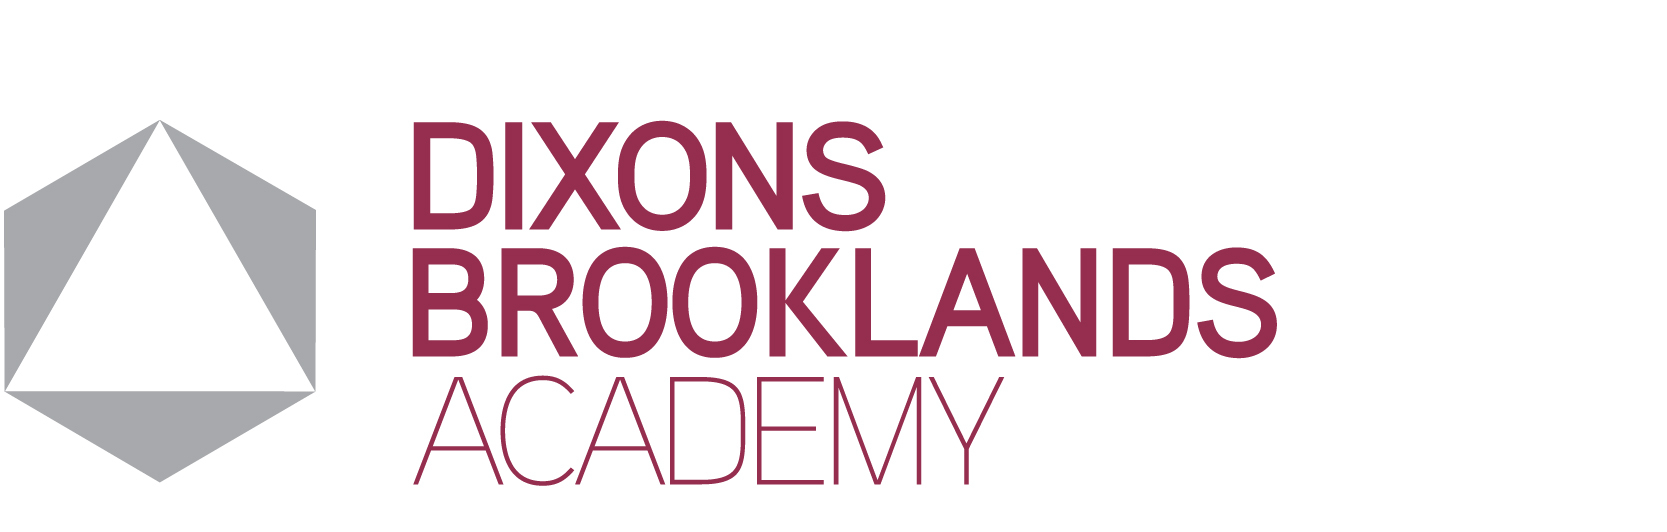 Dixons Brooklands Academy